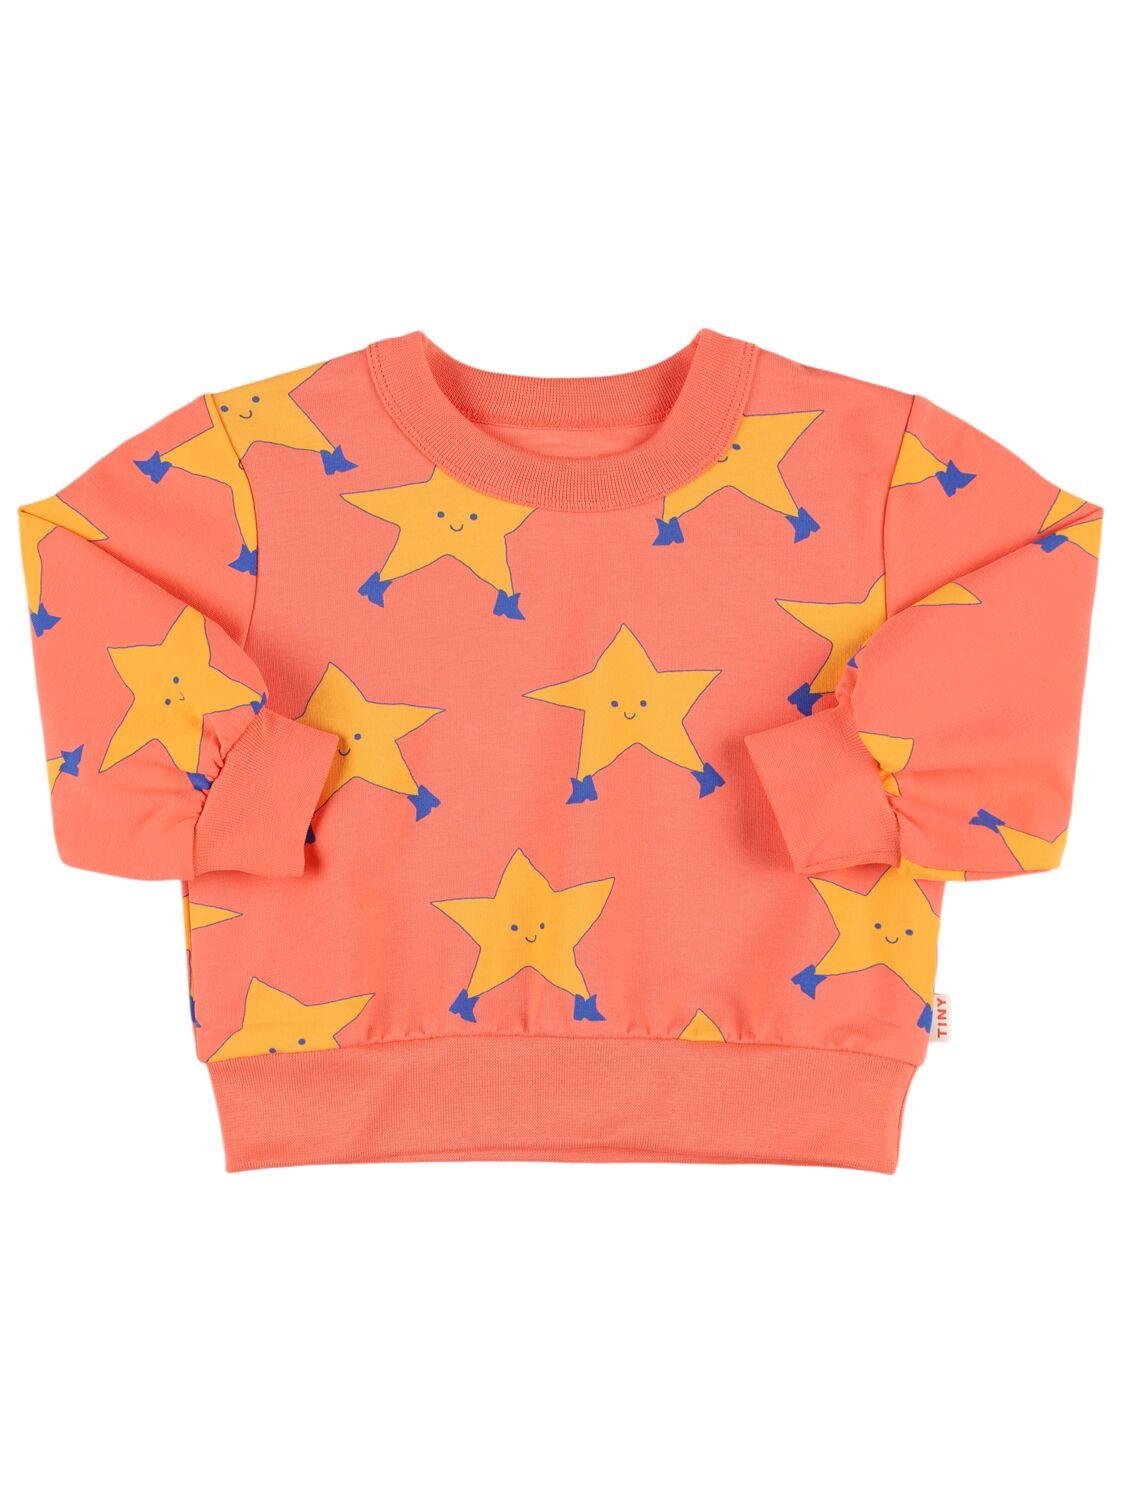 Star Print Pima Cotton Sweatshirt by TINY COTTONS